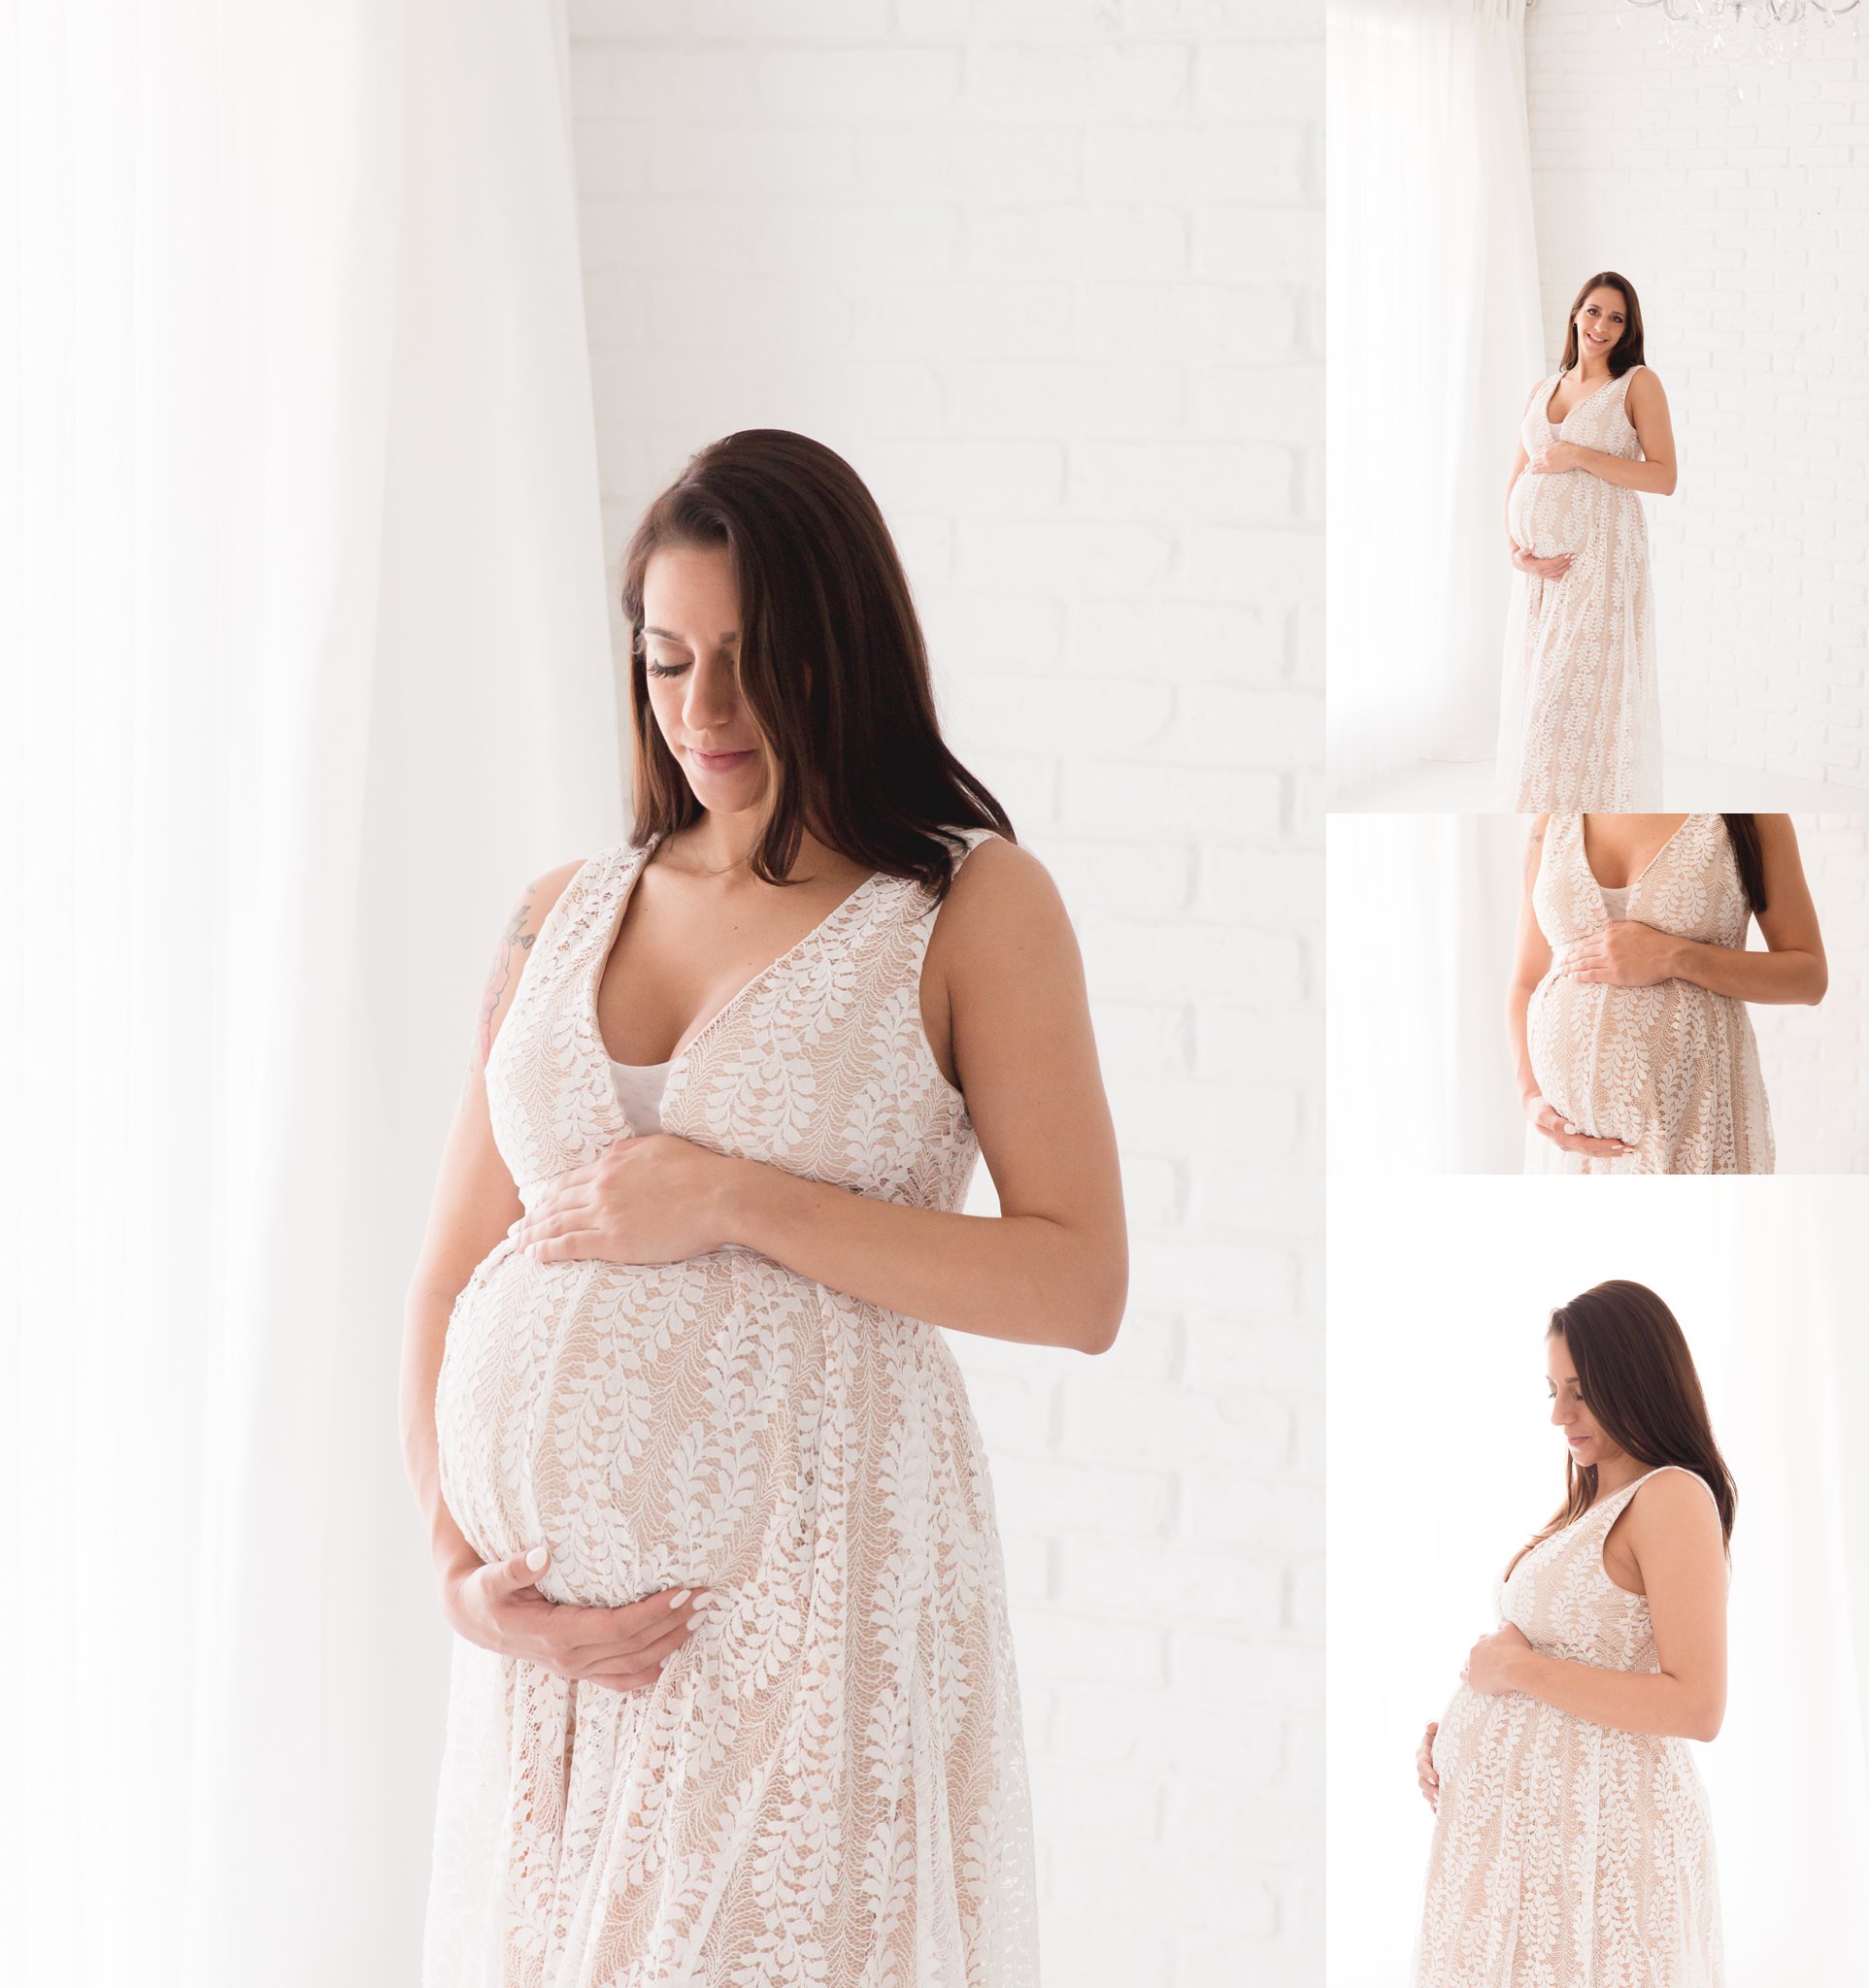  maternity photoshoot in jupiter fl photography studio